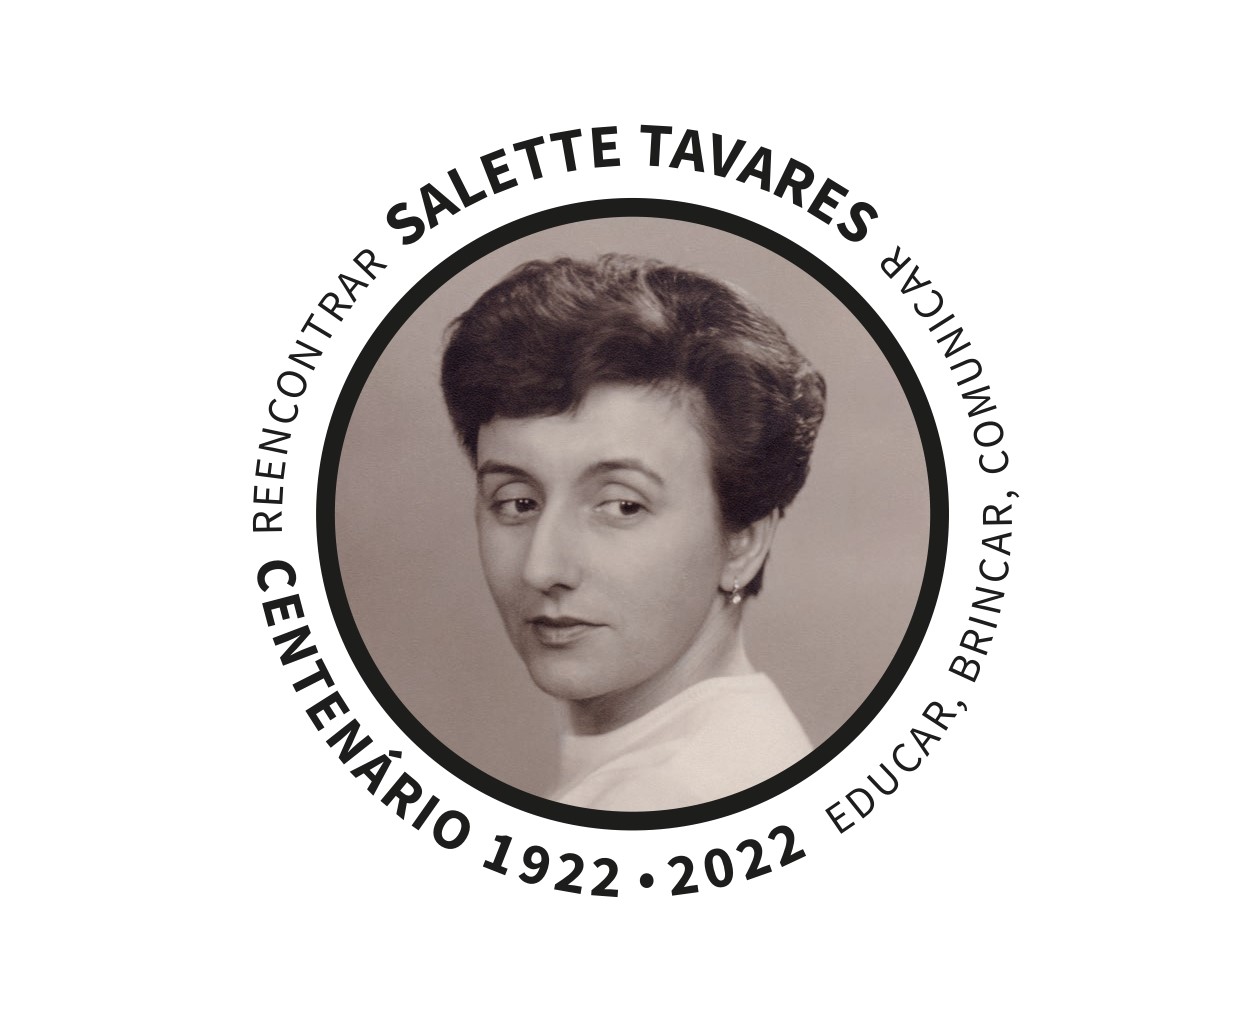 100 anos de Salette Tavares